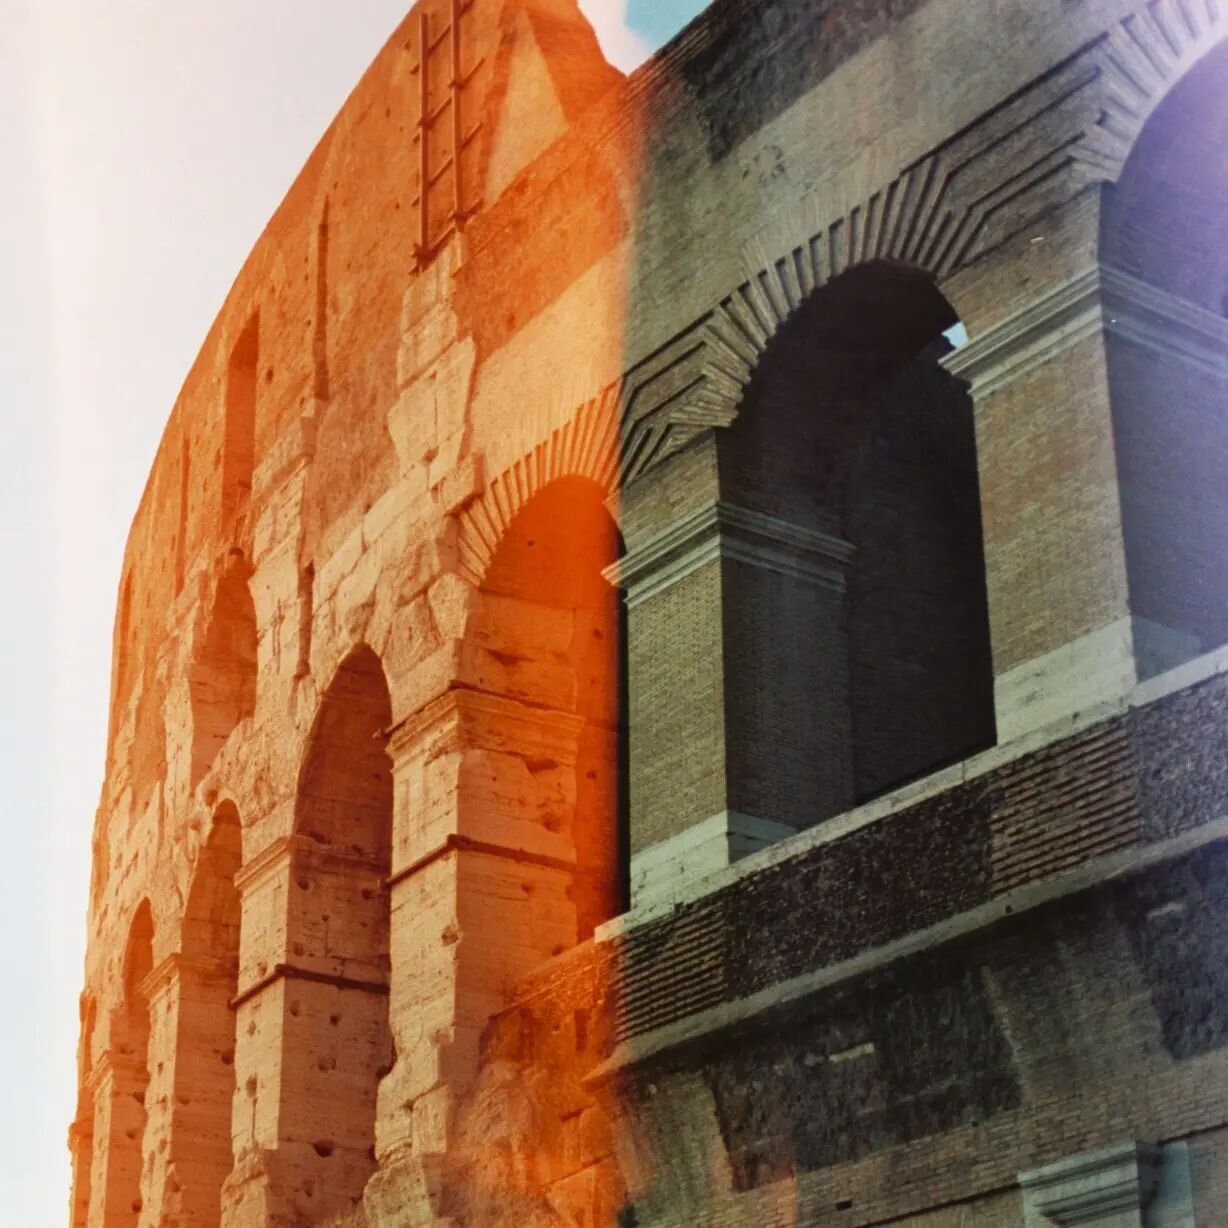 Rome Colosseum on expired film
.
.
.
.
.
.
.
.
.
#photooftheday #photographer #photography #travelphotography #travelgram #travel #canonphotography #canon #canonae1 #rome #italy #natgeoyourshot #natgeotravel #coffee #coffeeshop #film #filmphotography